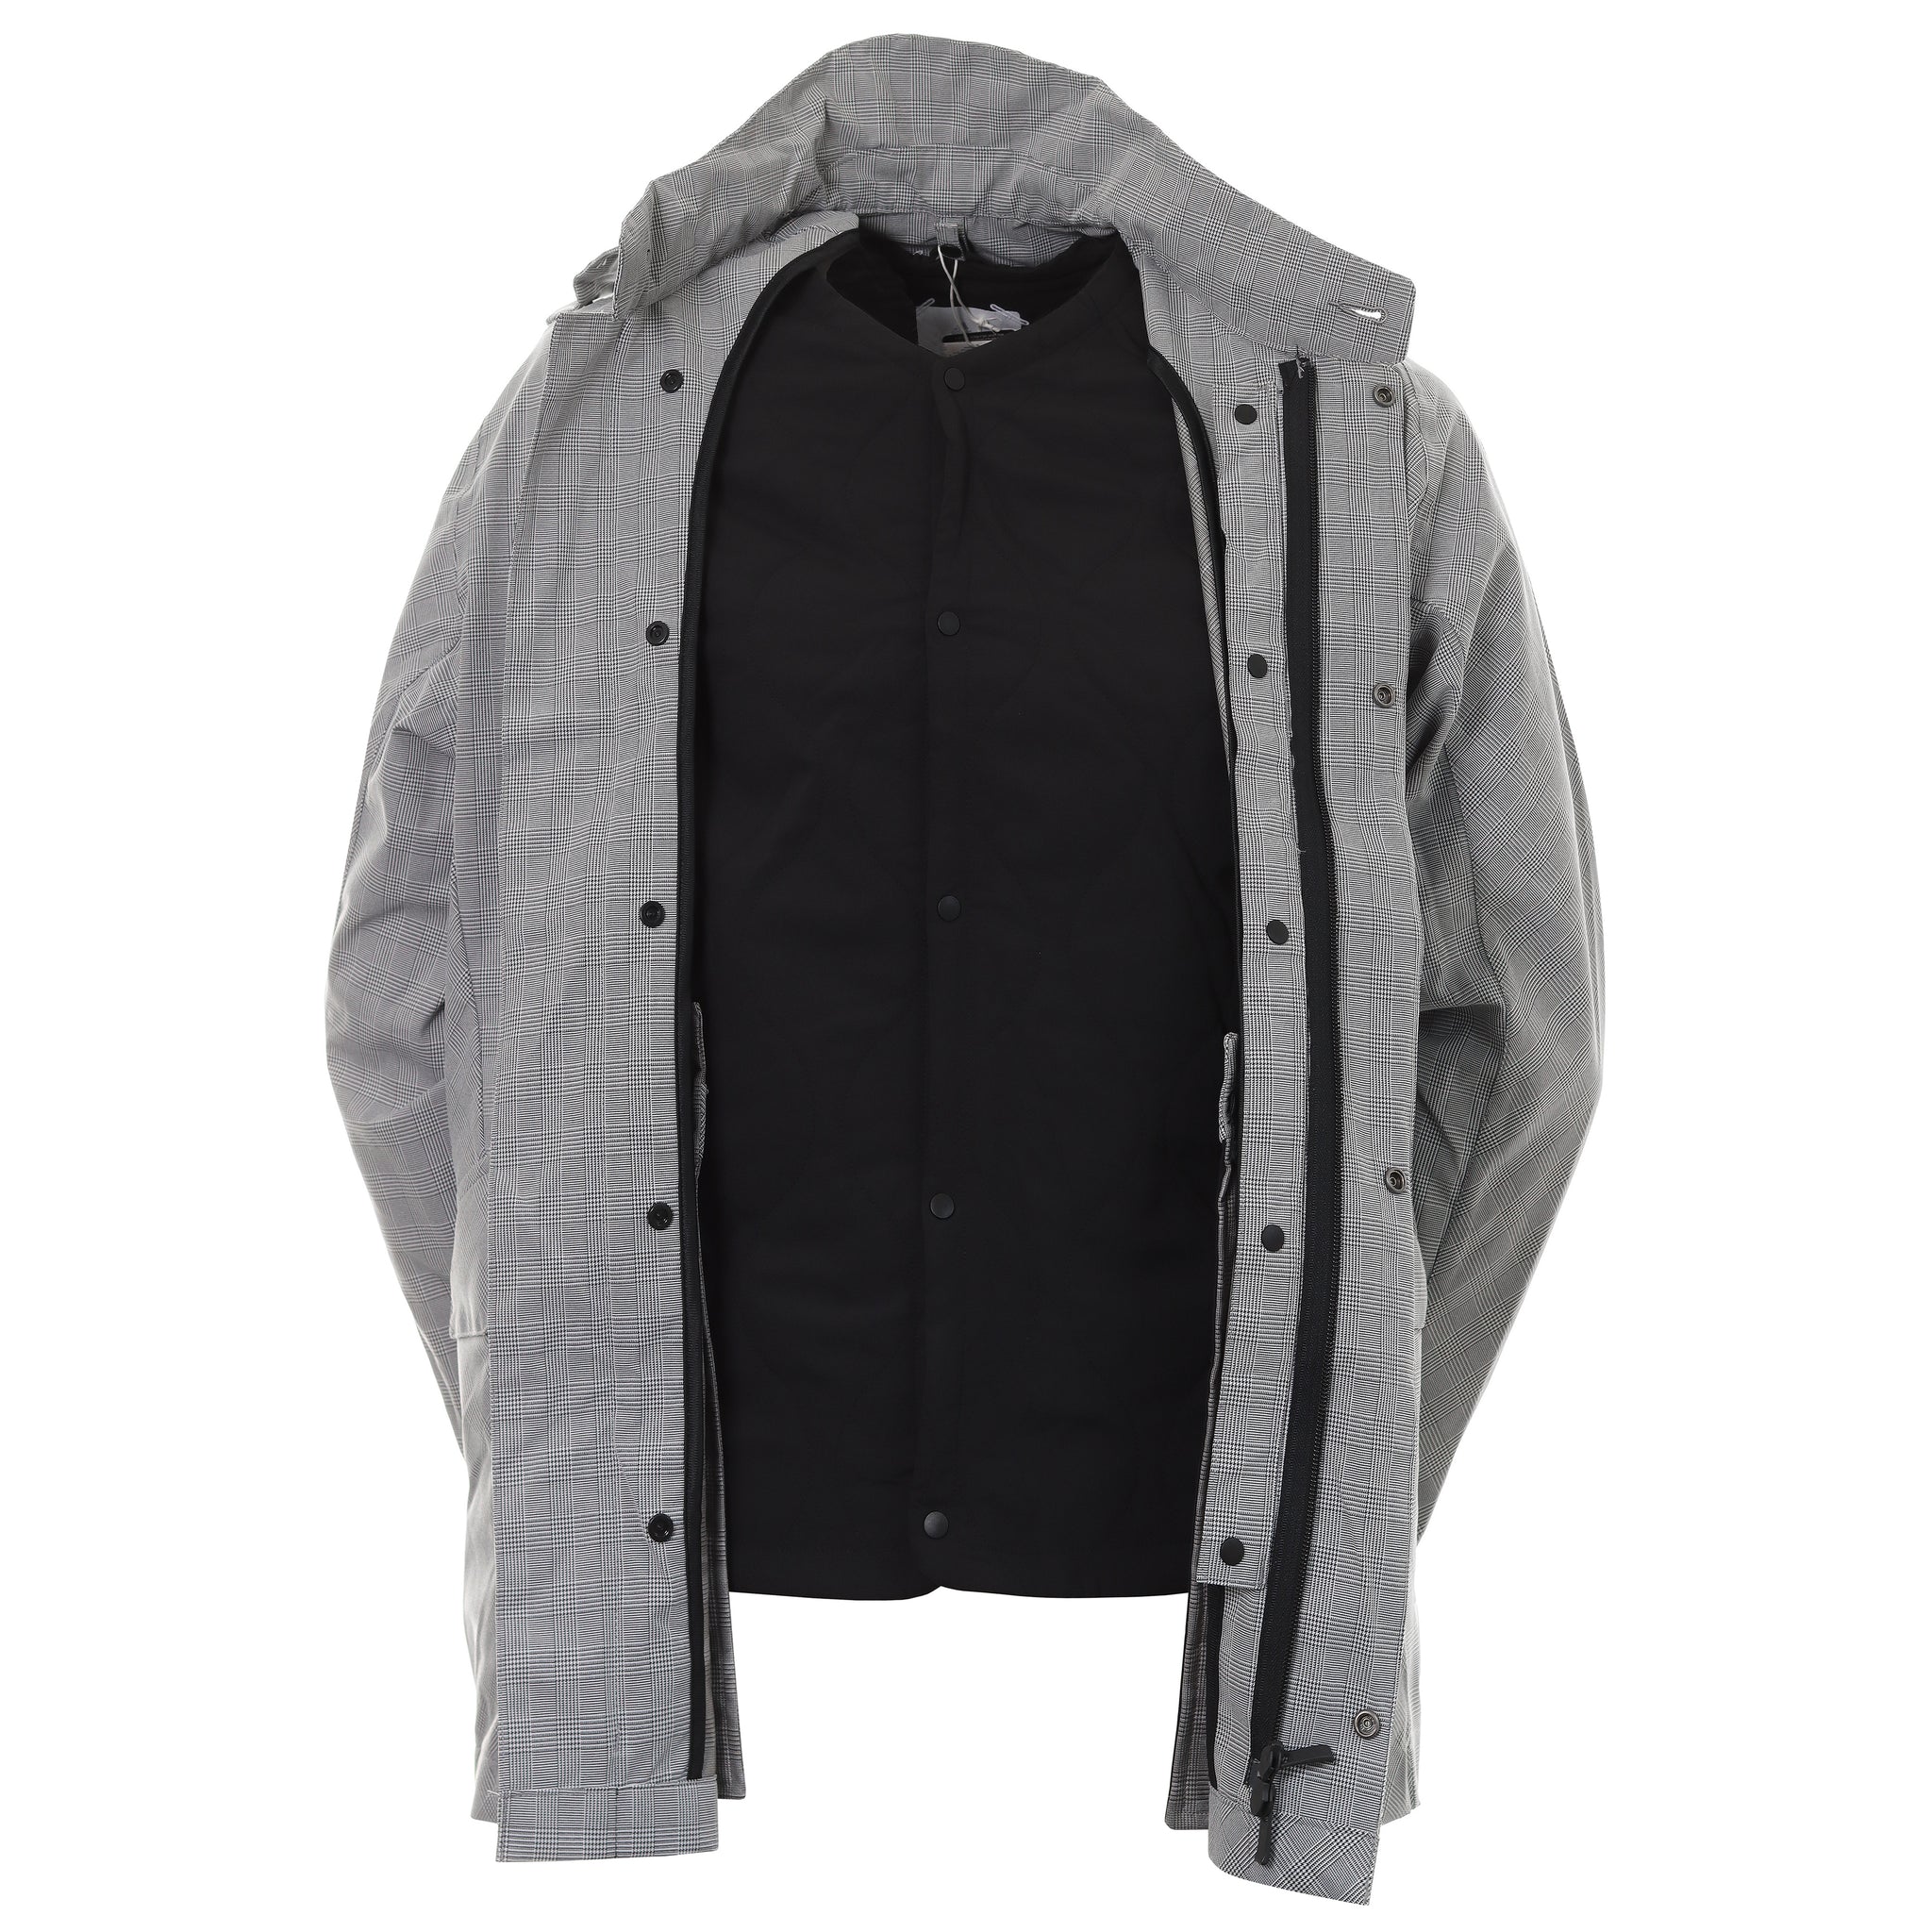 adidas-golf-adicross-elements-jacket-hf9117-grey-heather